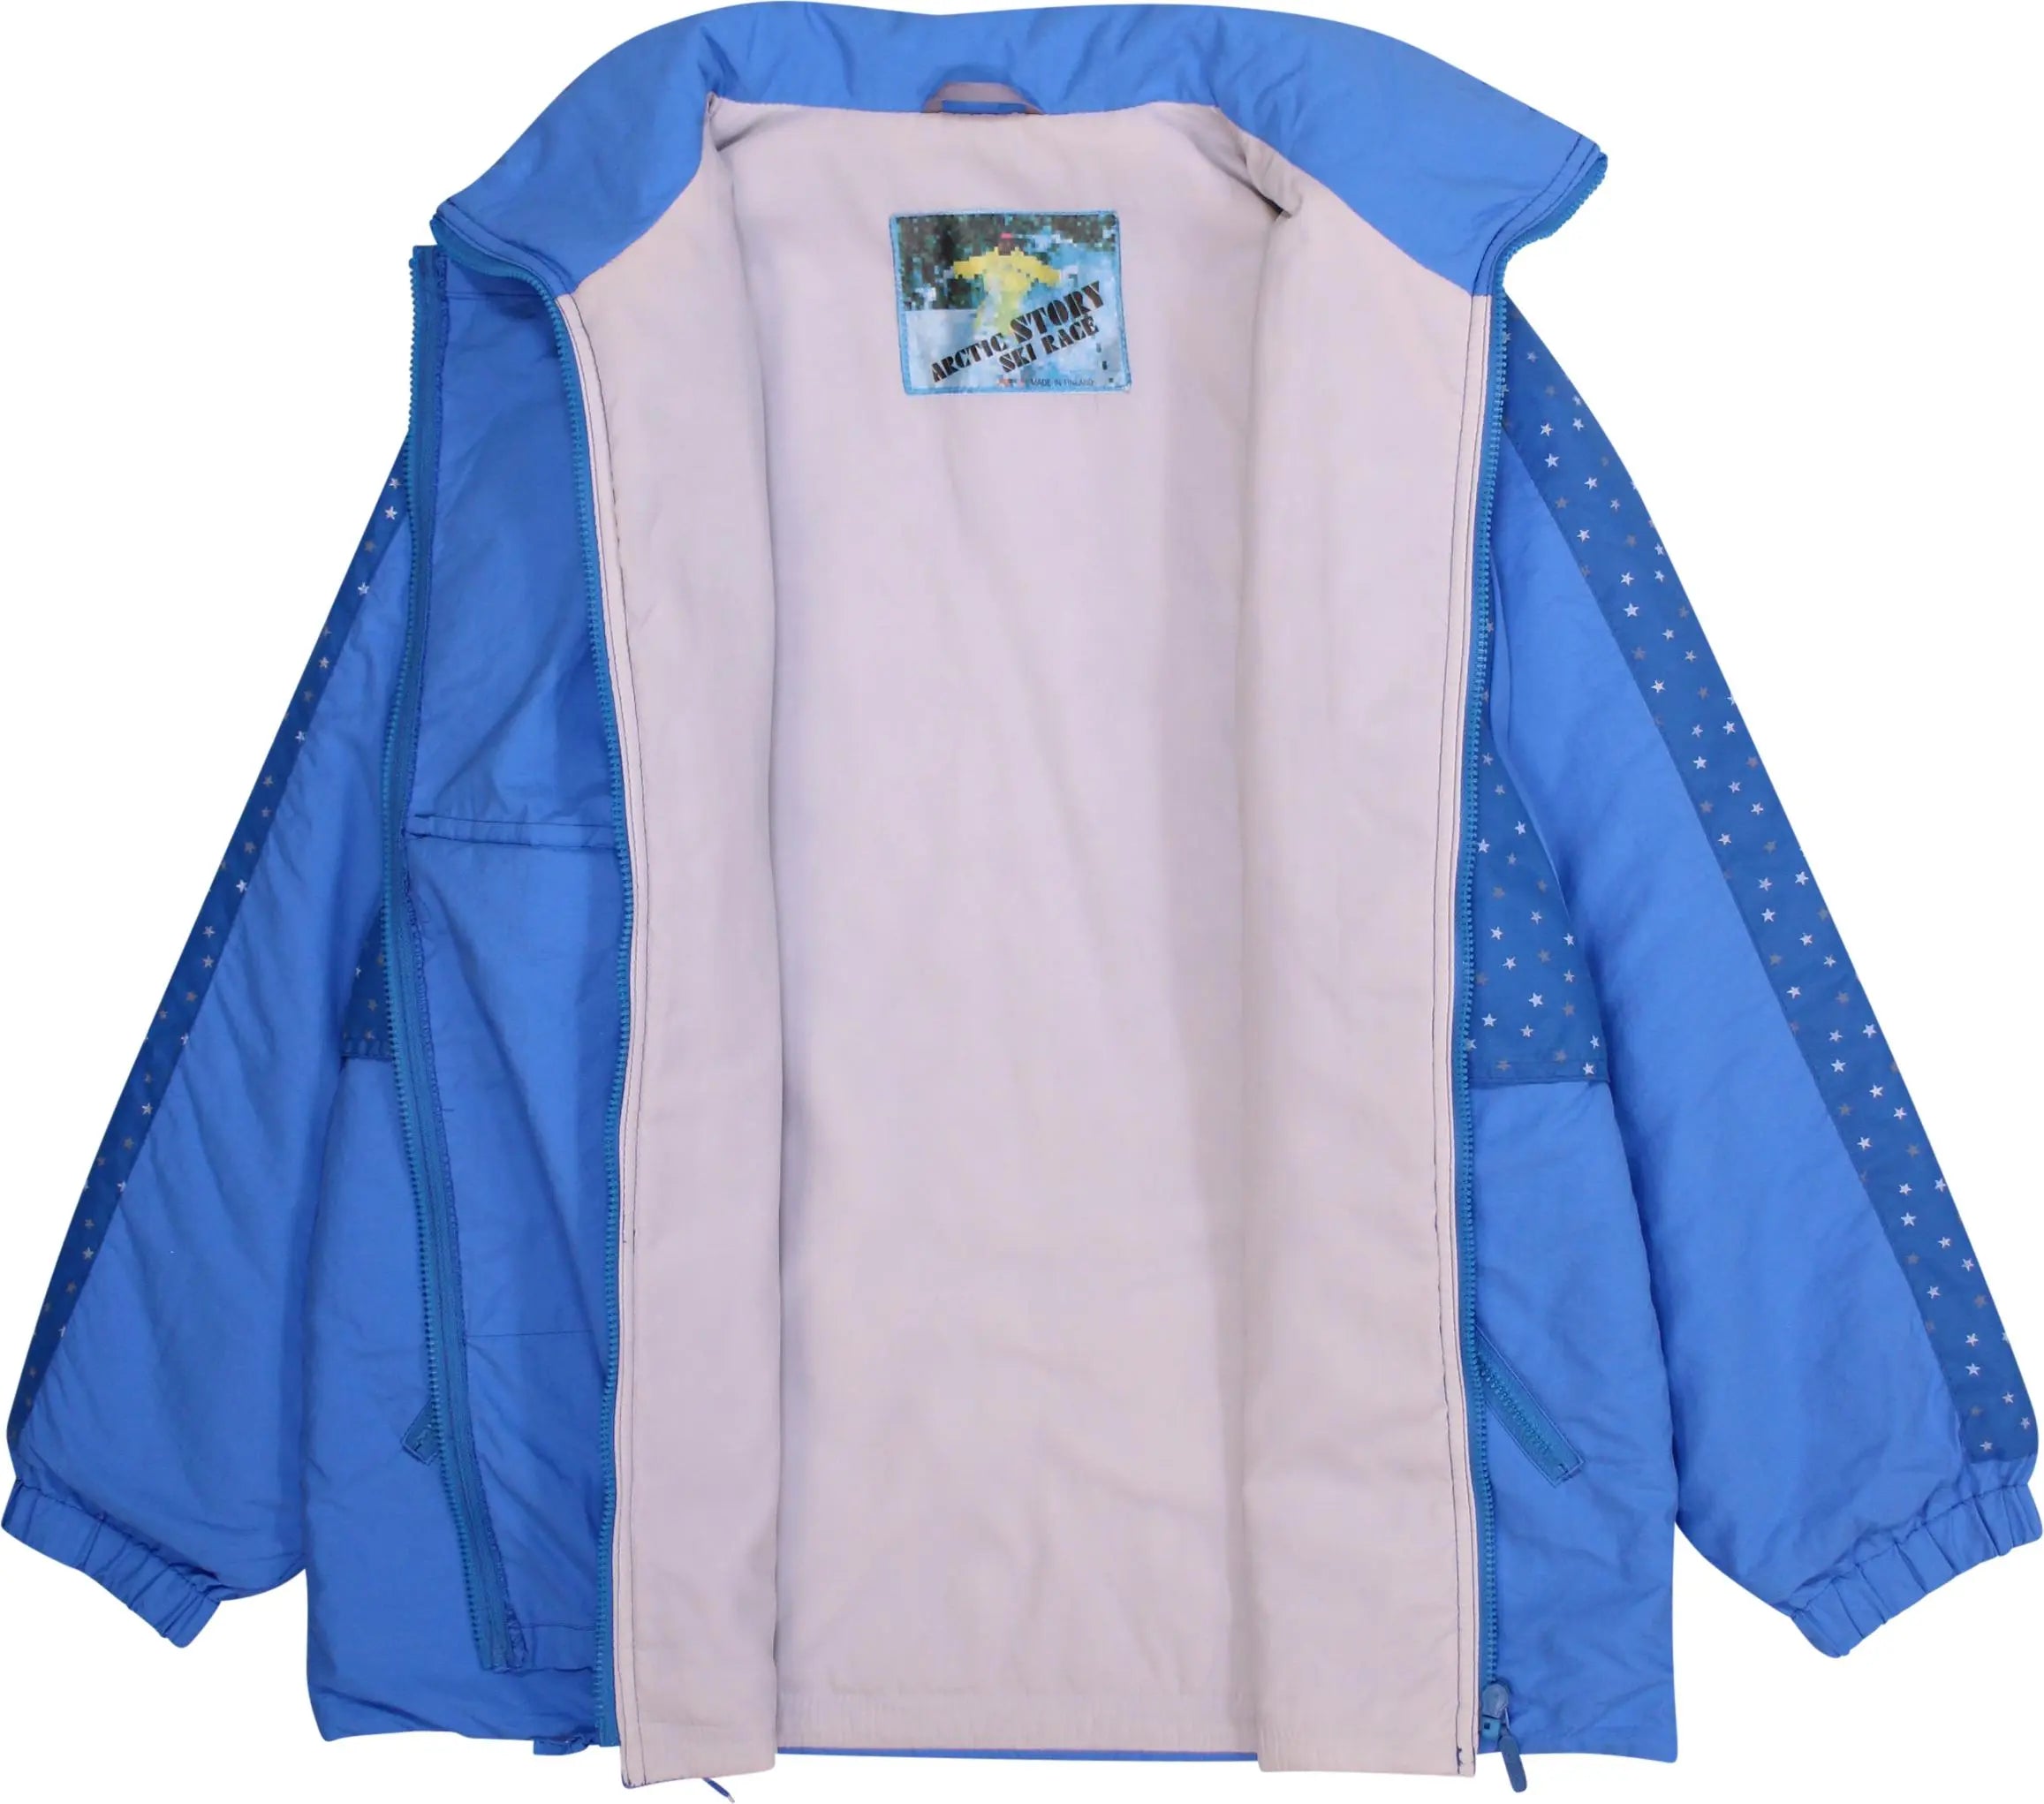 Arctic Story Ski Race - Blue Front Pocket Jacket- ThriftTale.com - Vintage and second handclothing